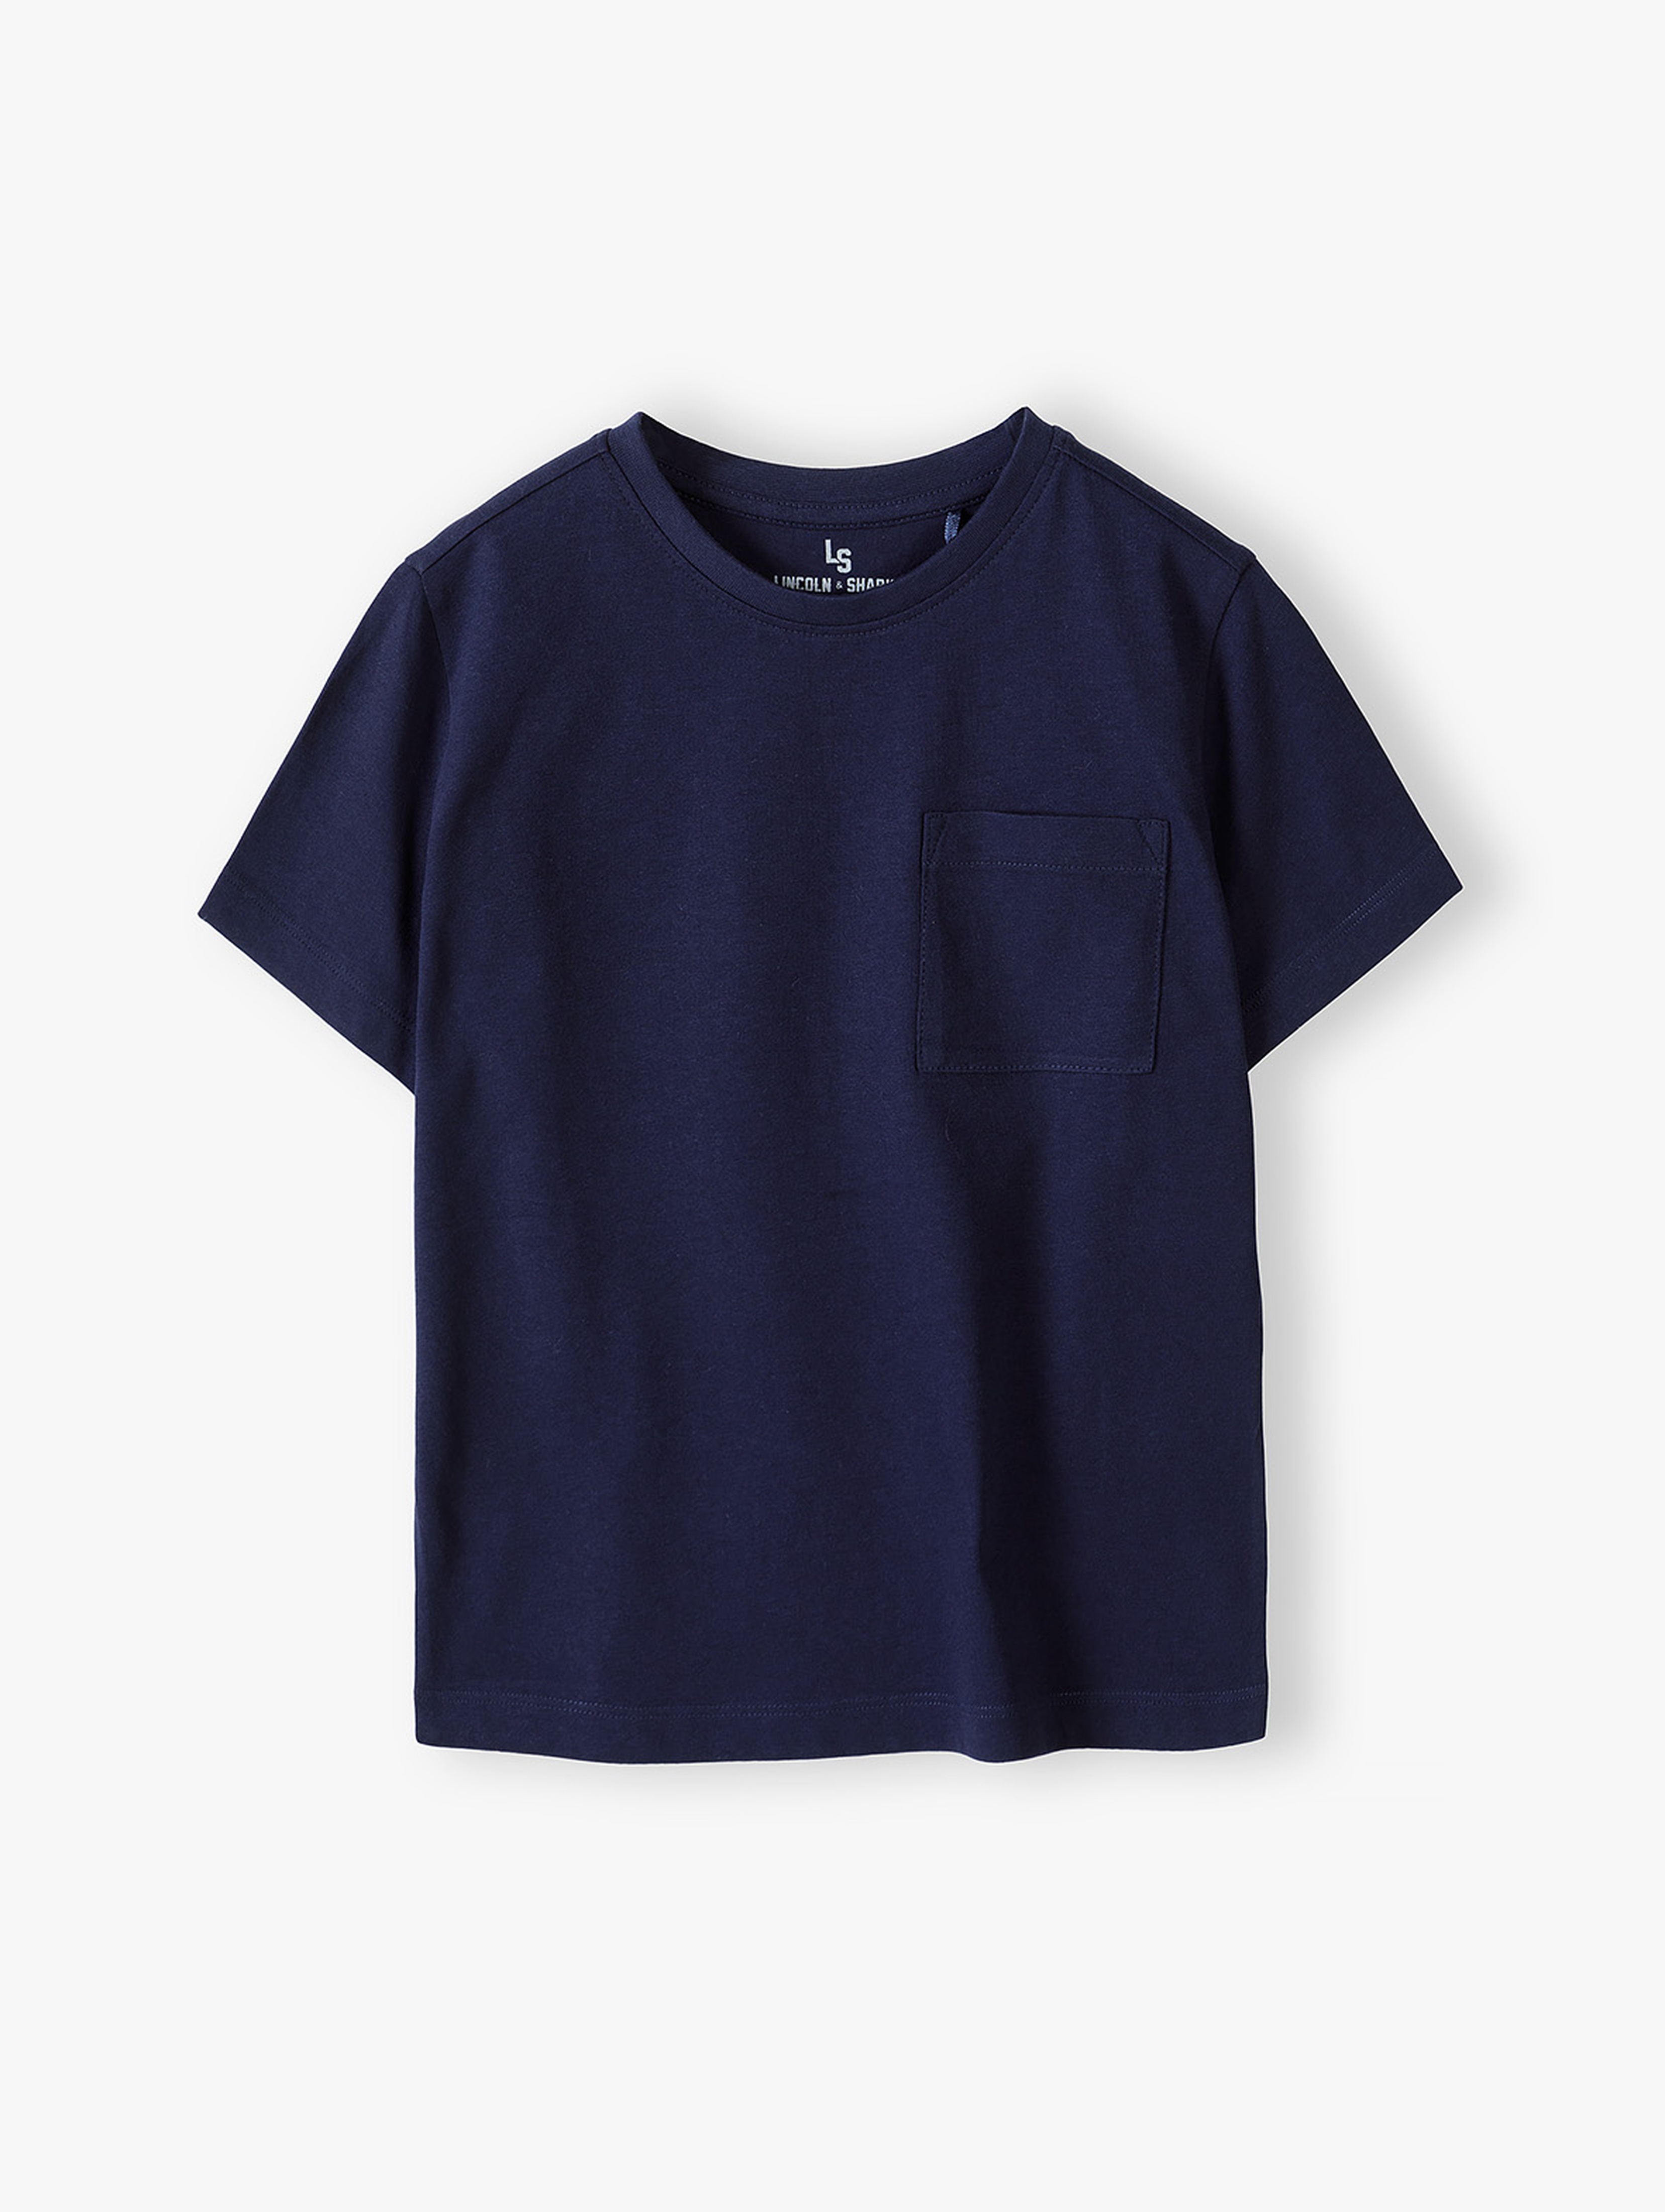 Granatowy t-shirt dla chłopca - Lincoln&Sharks